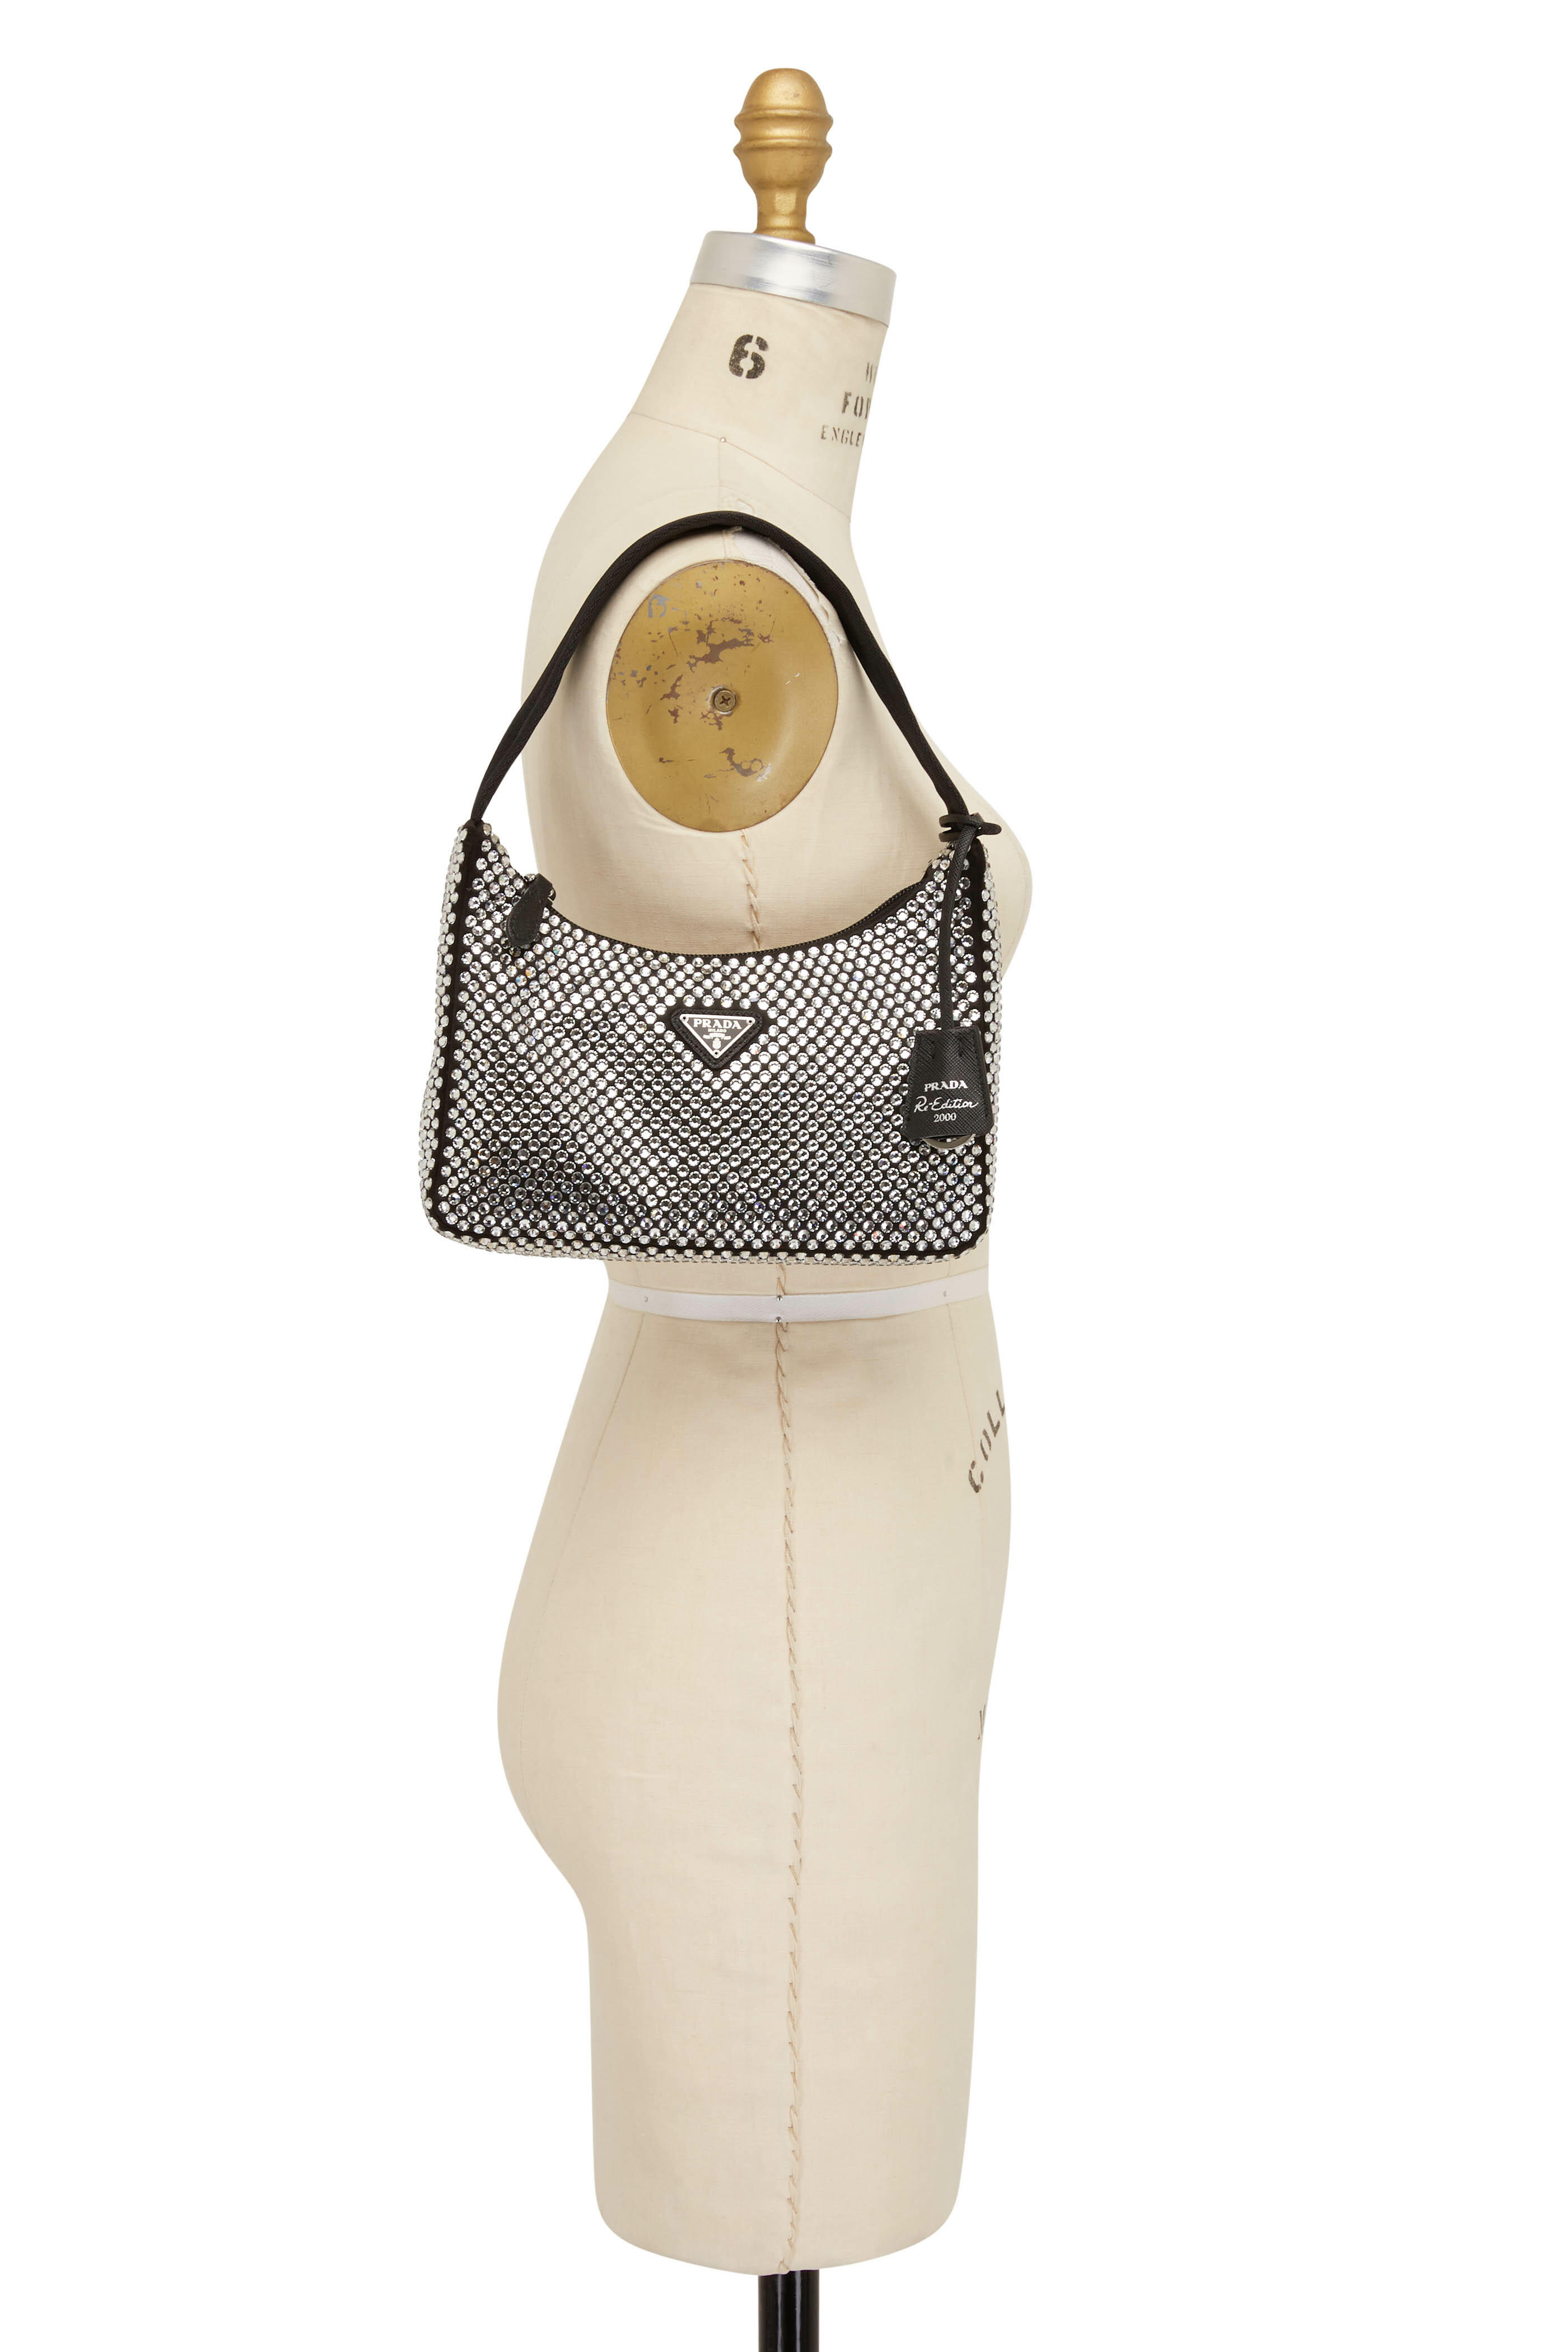 Prada White Satin Mini Bag with Crystals - Originally $2700